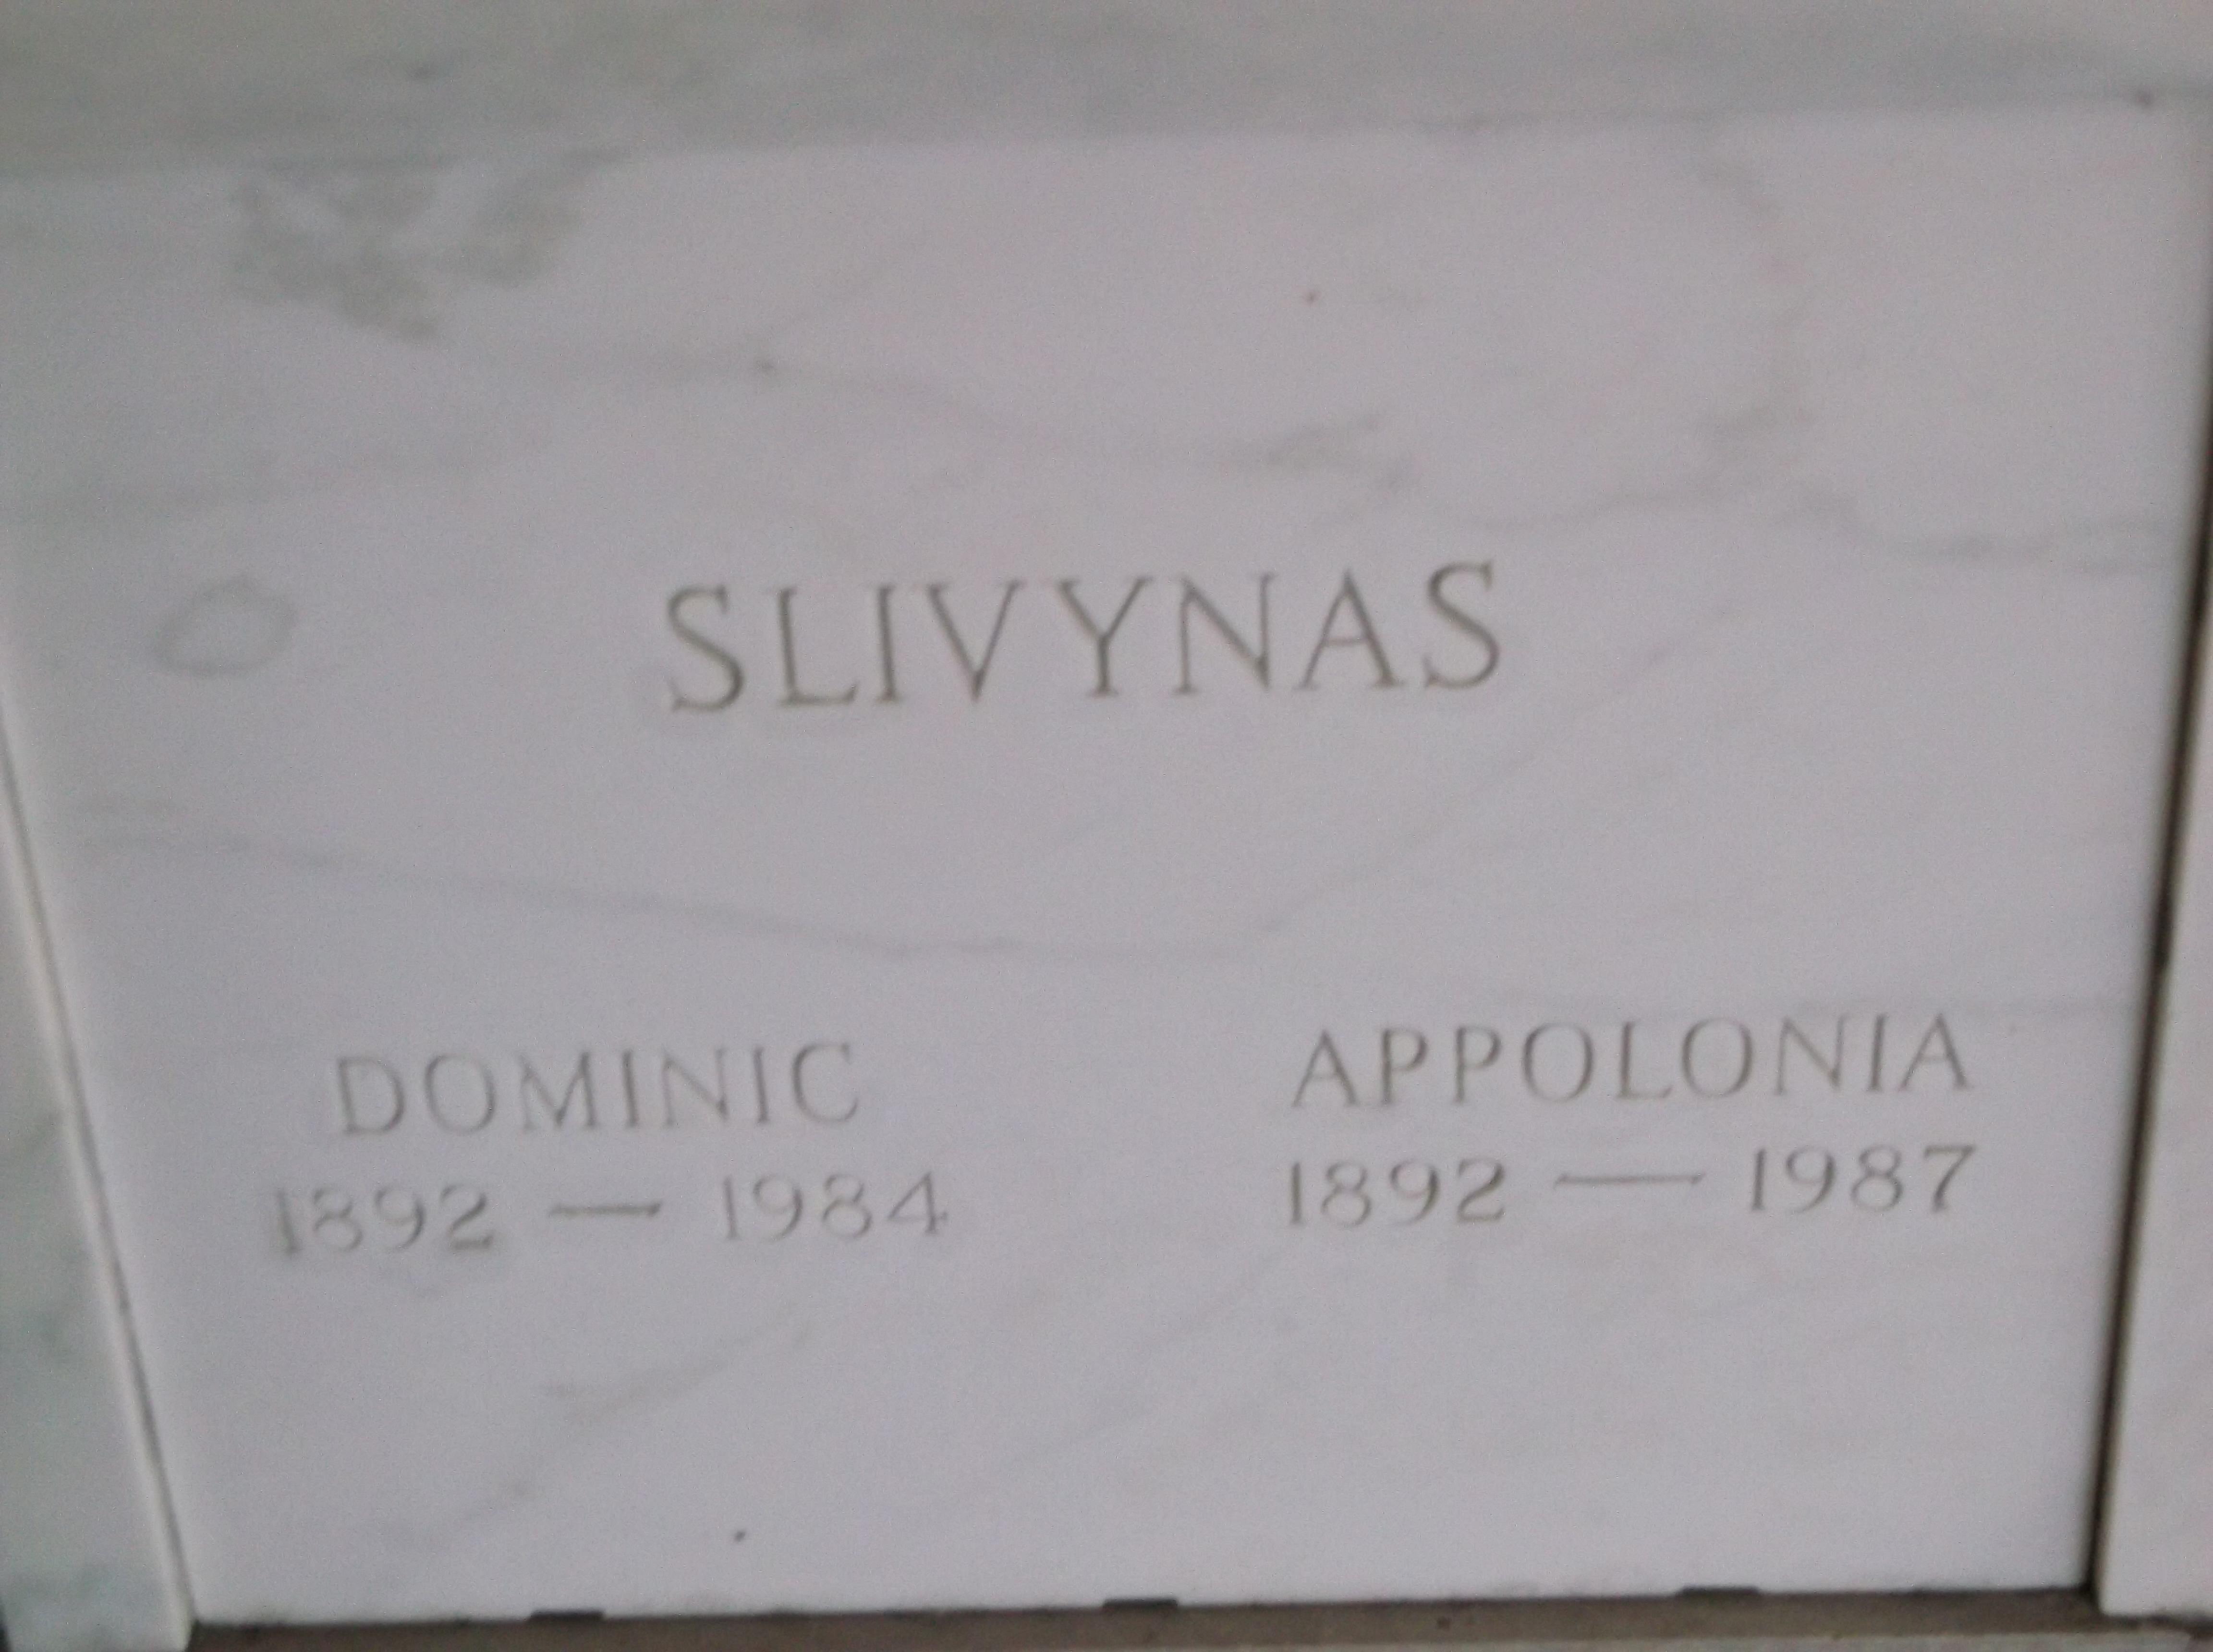 Dominic Slivynas